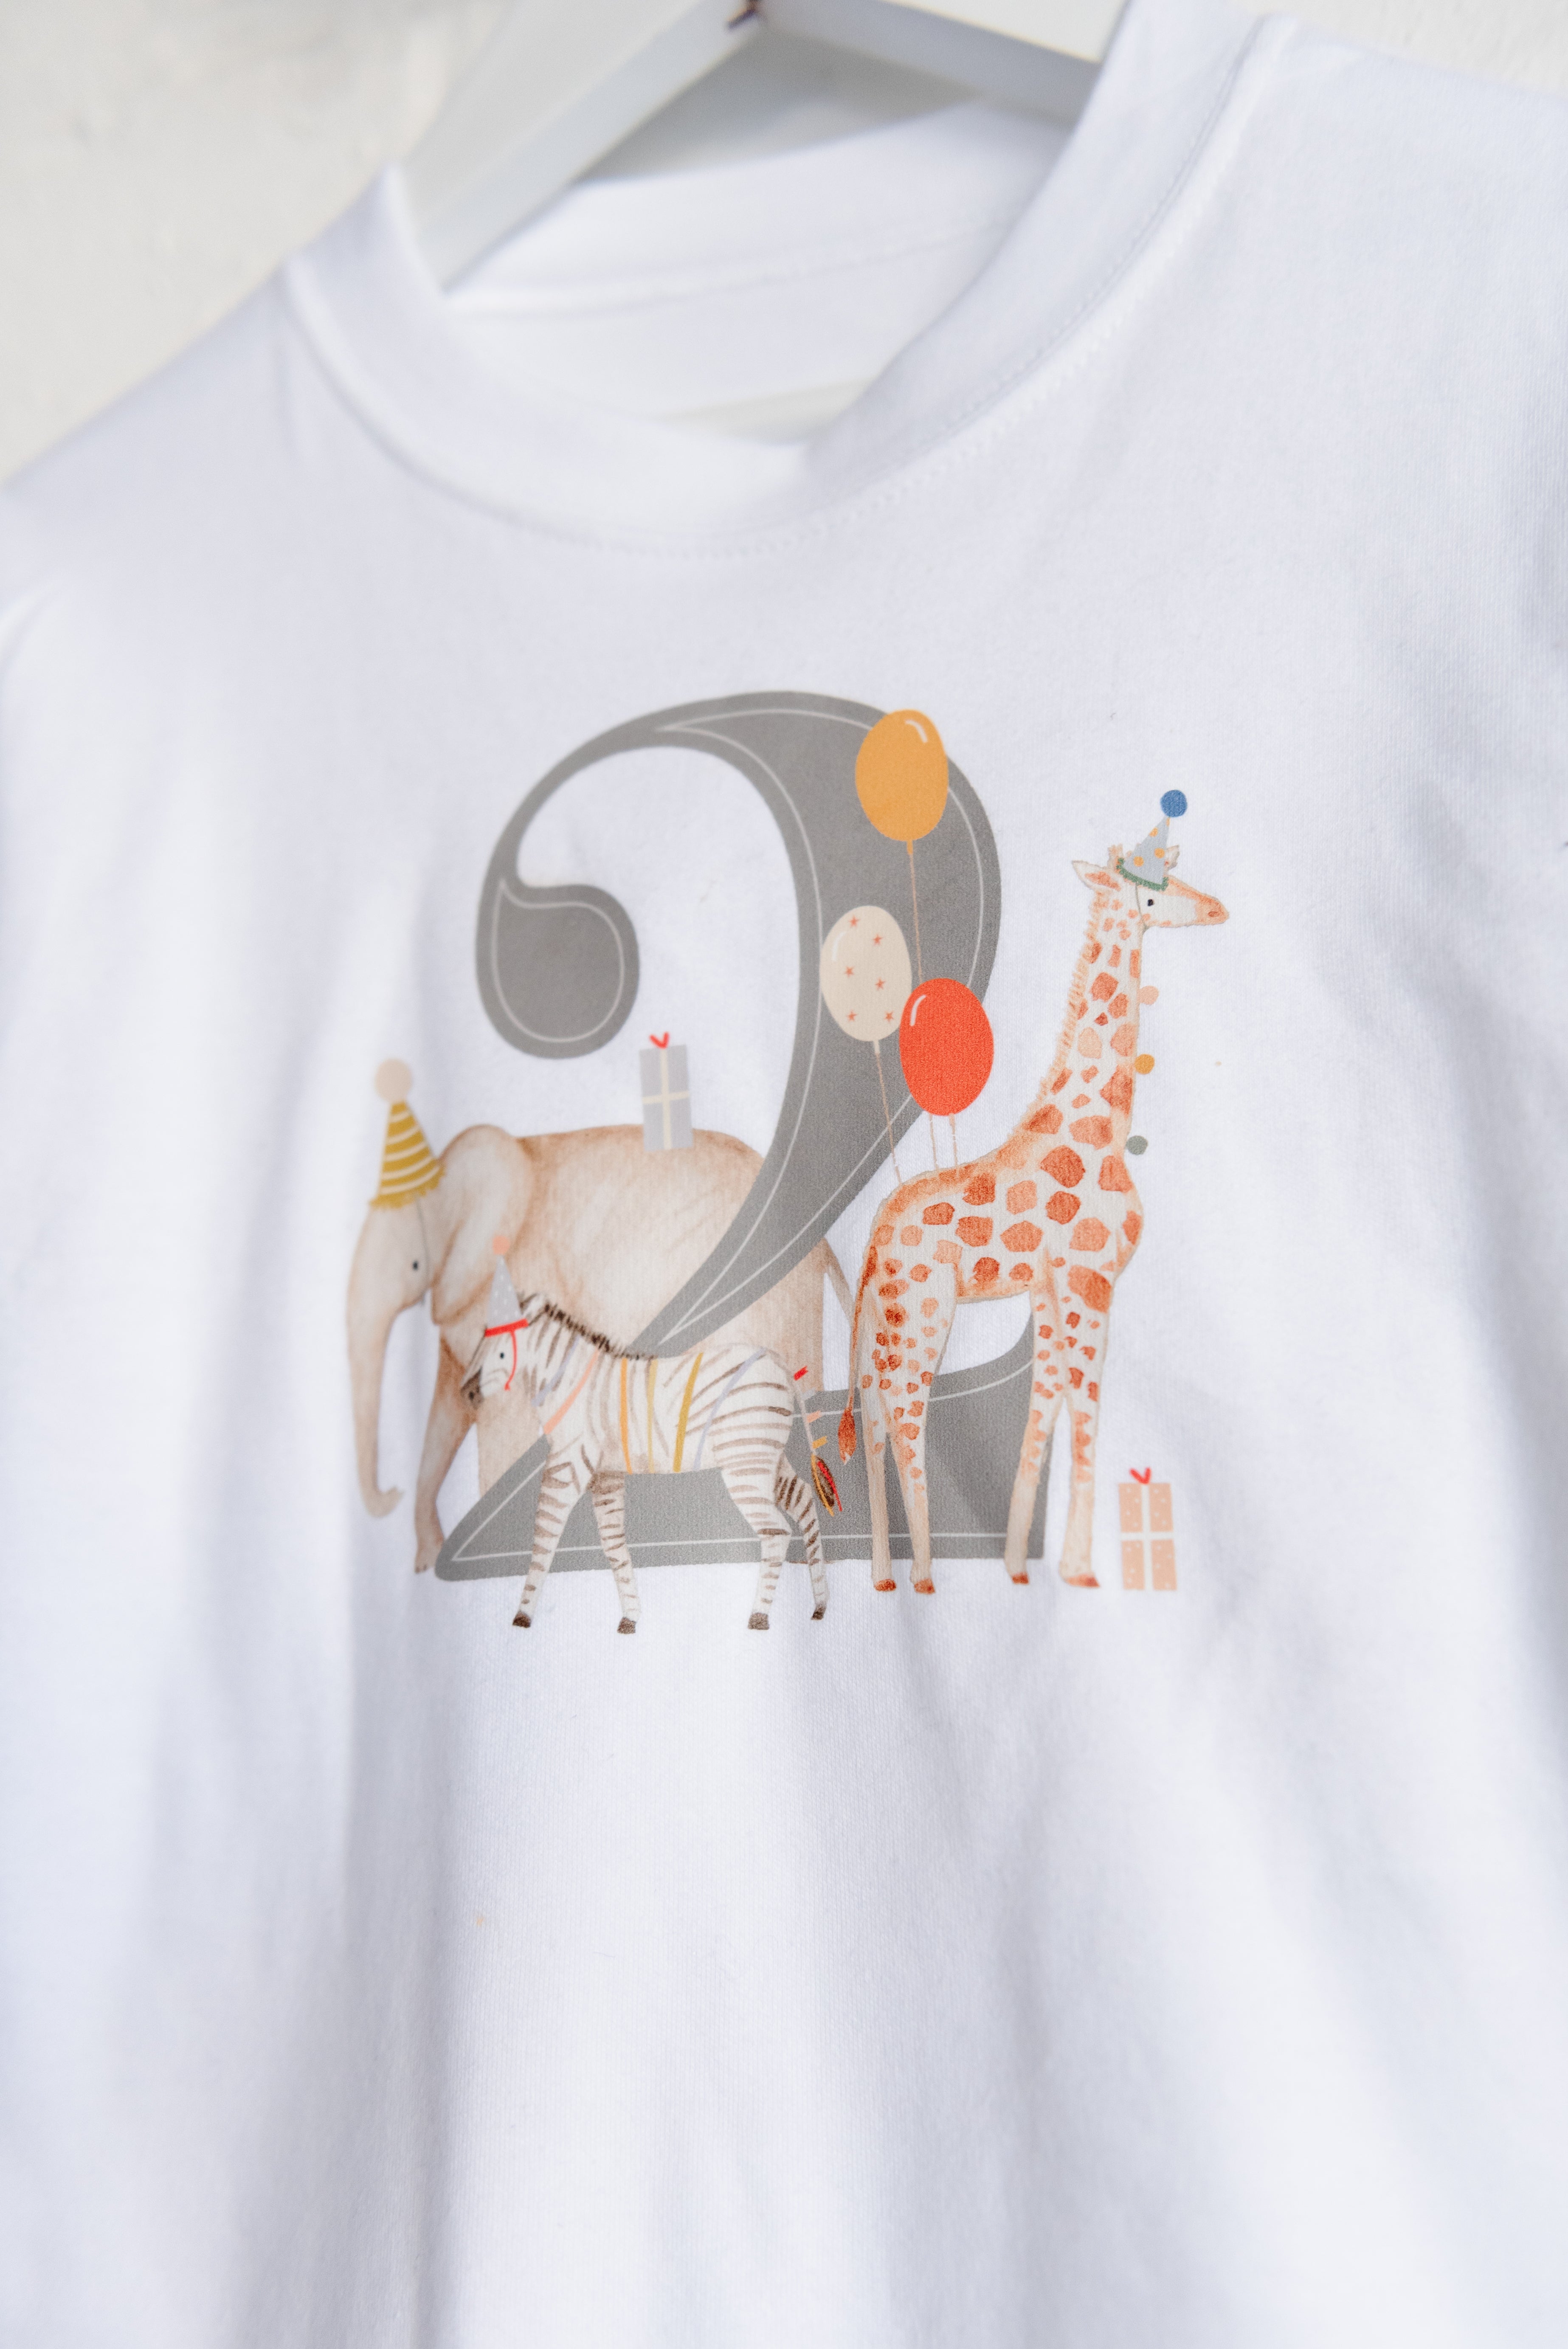 Safari Two T Shirt